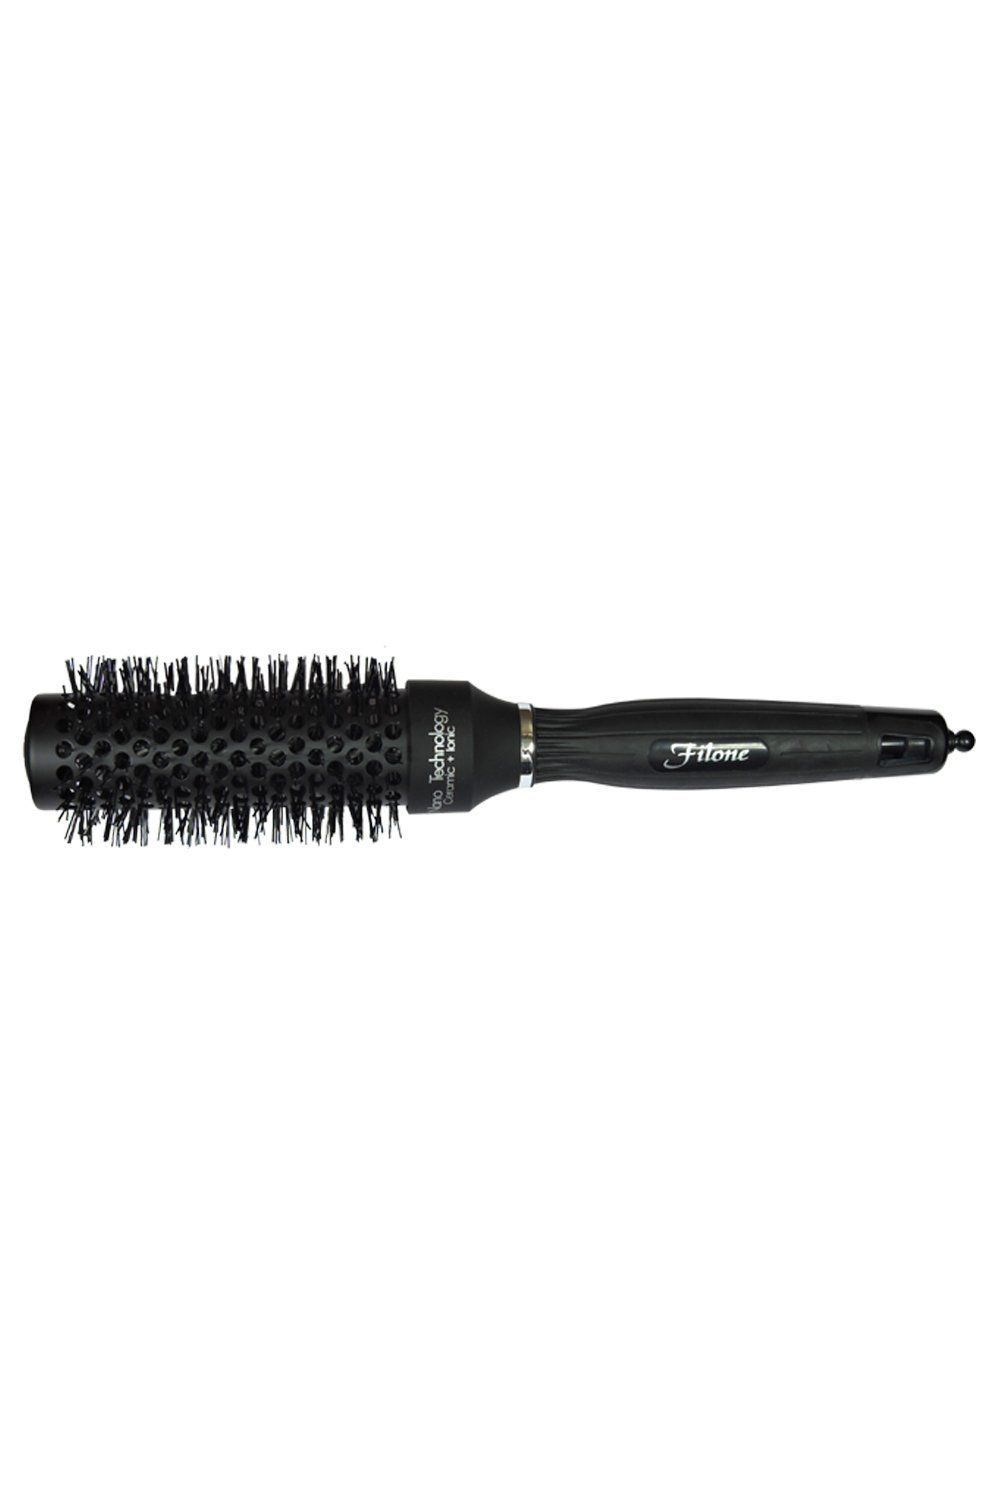 Buy Filone Hot Curl Brush 9516CW - Purplle